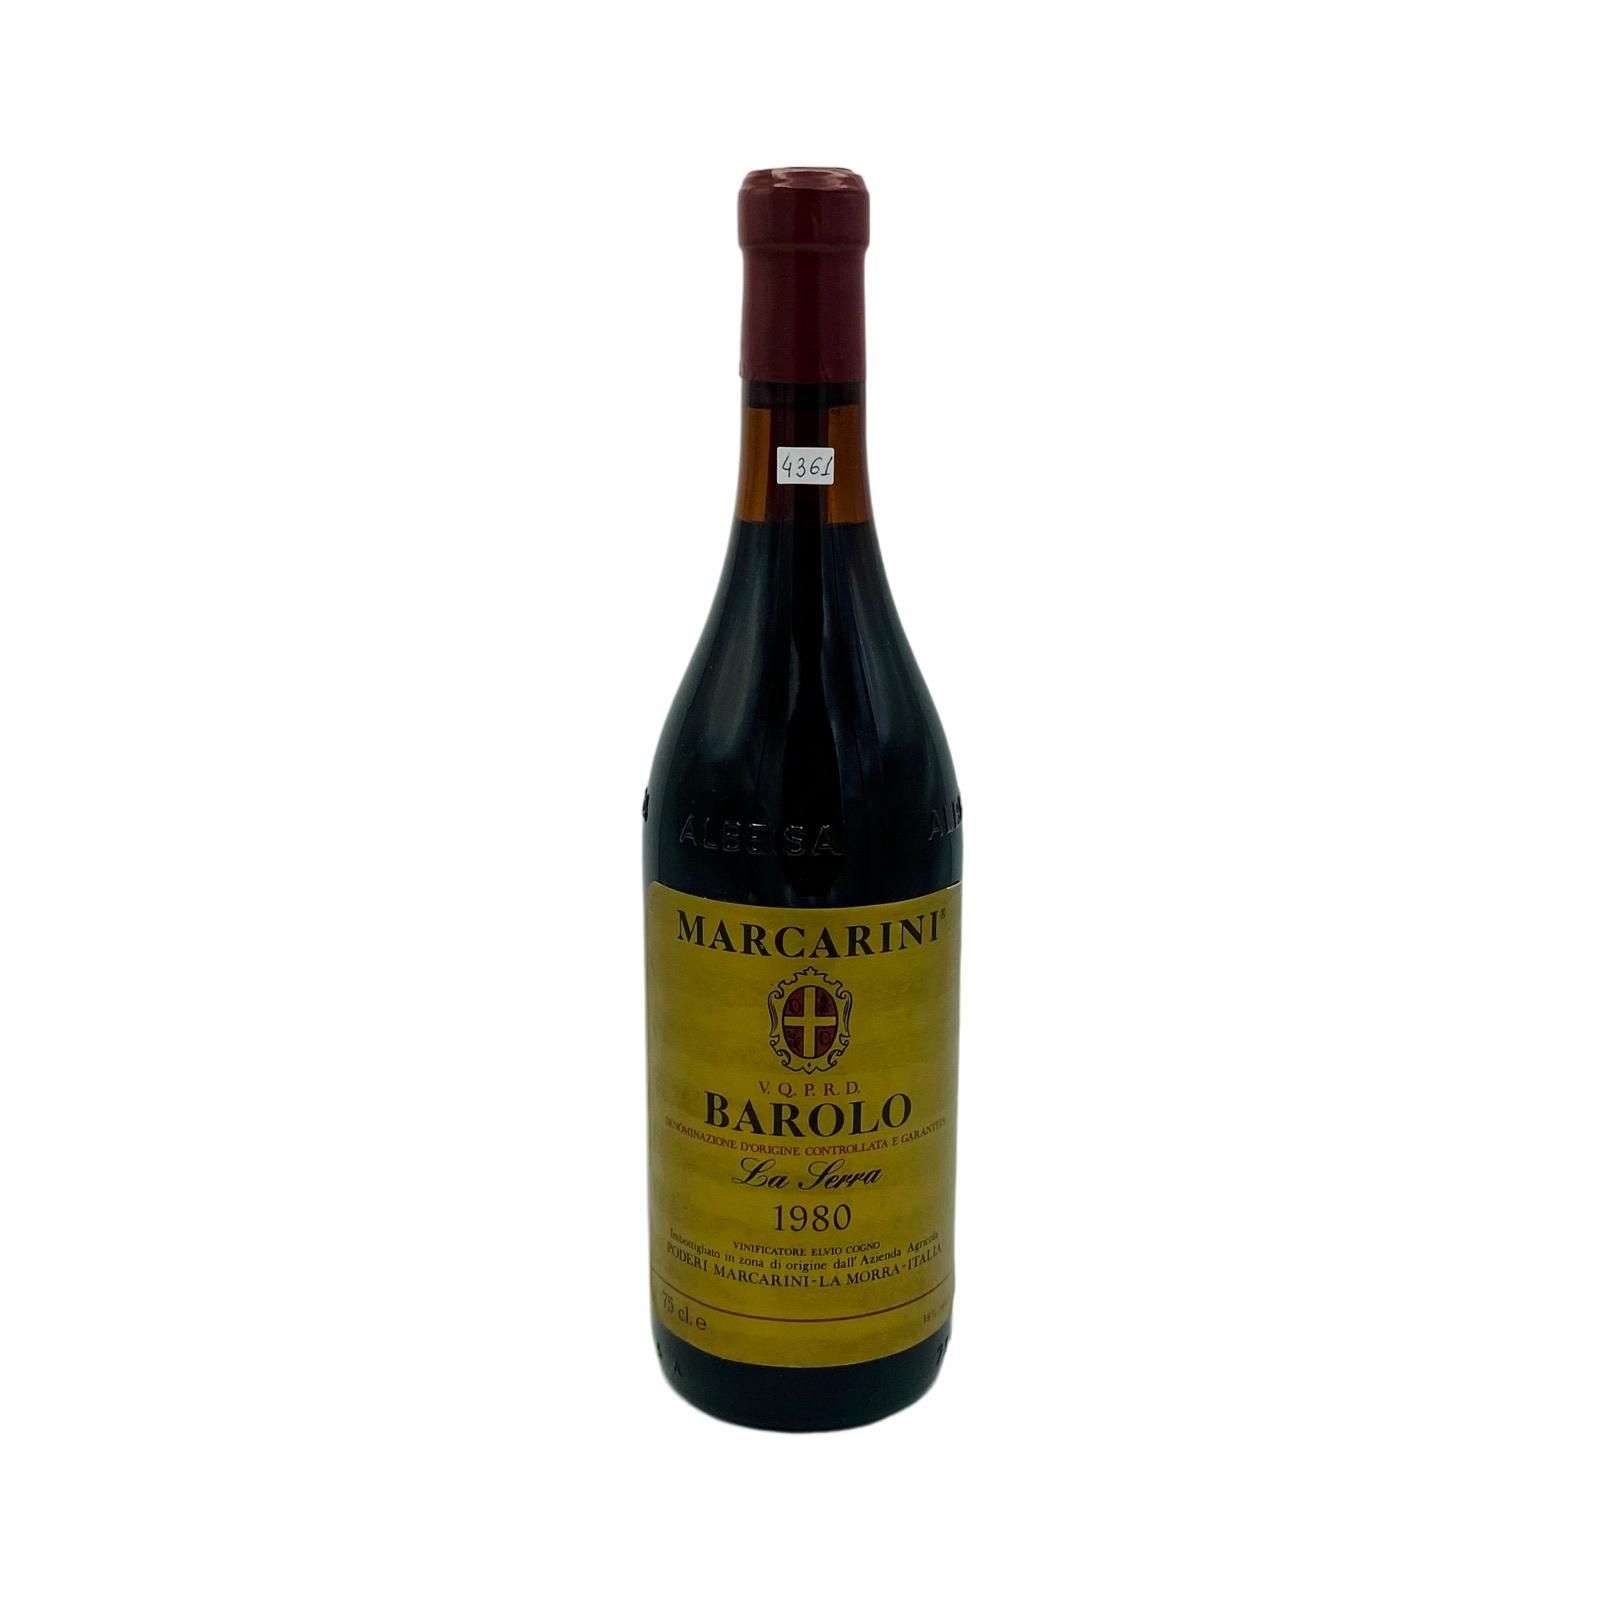 Vintage Bottle - Marcarini Barolo DOCG La Serra 1980 0 75 lt. - COD. 4361